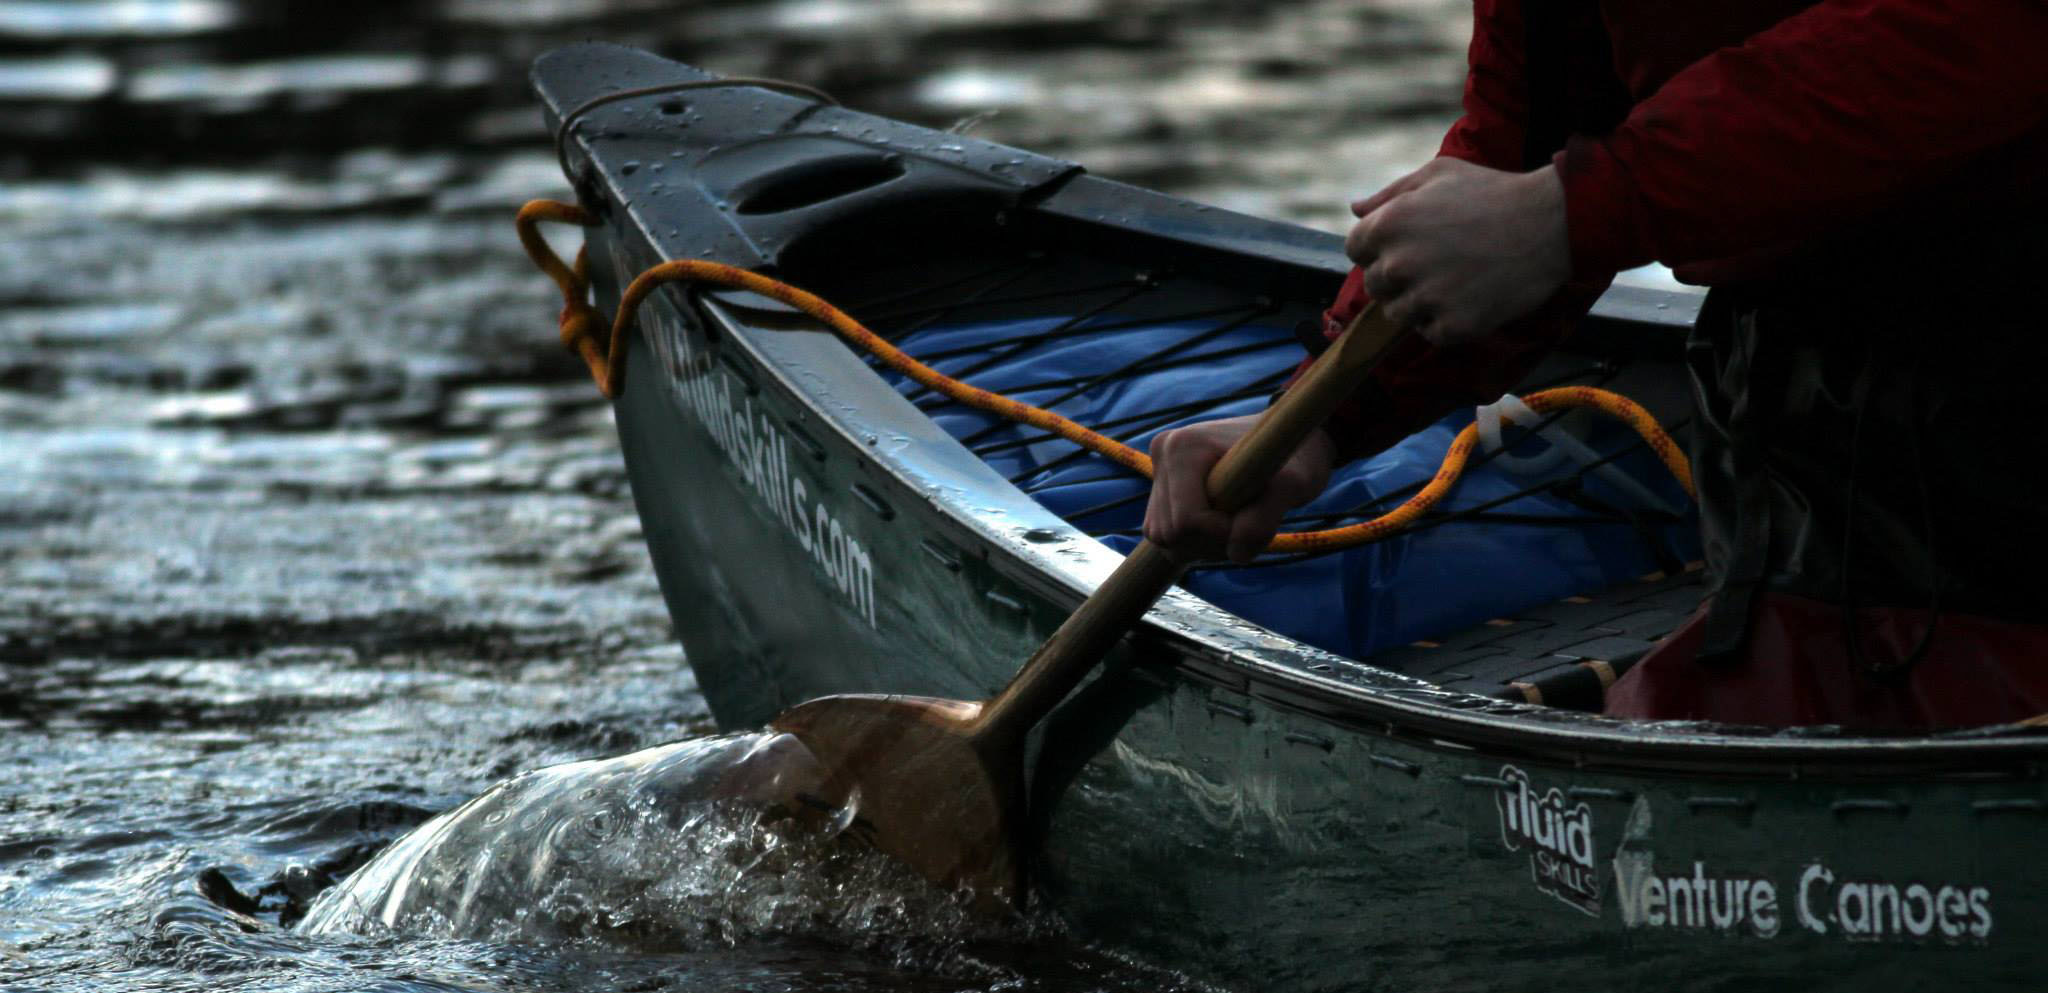 BCU Moderate Water Endorsement Canoe Training picture